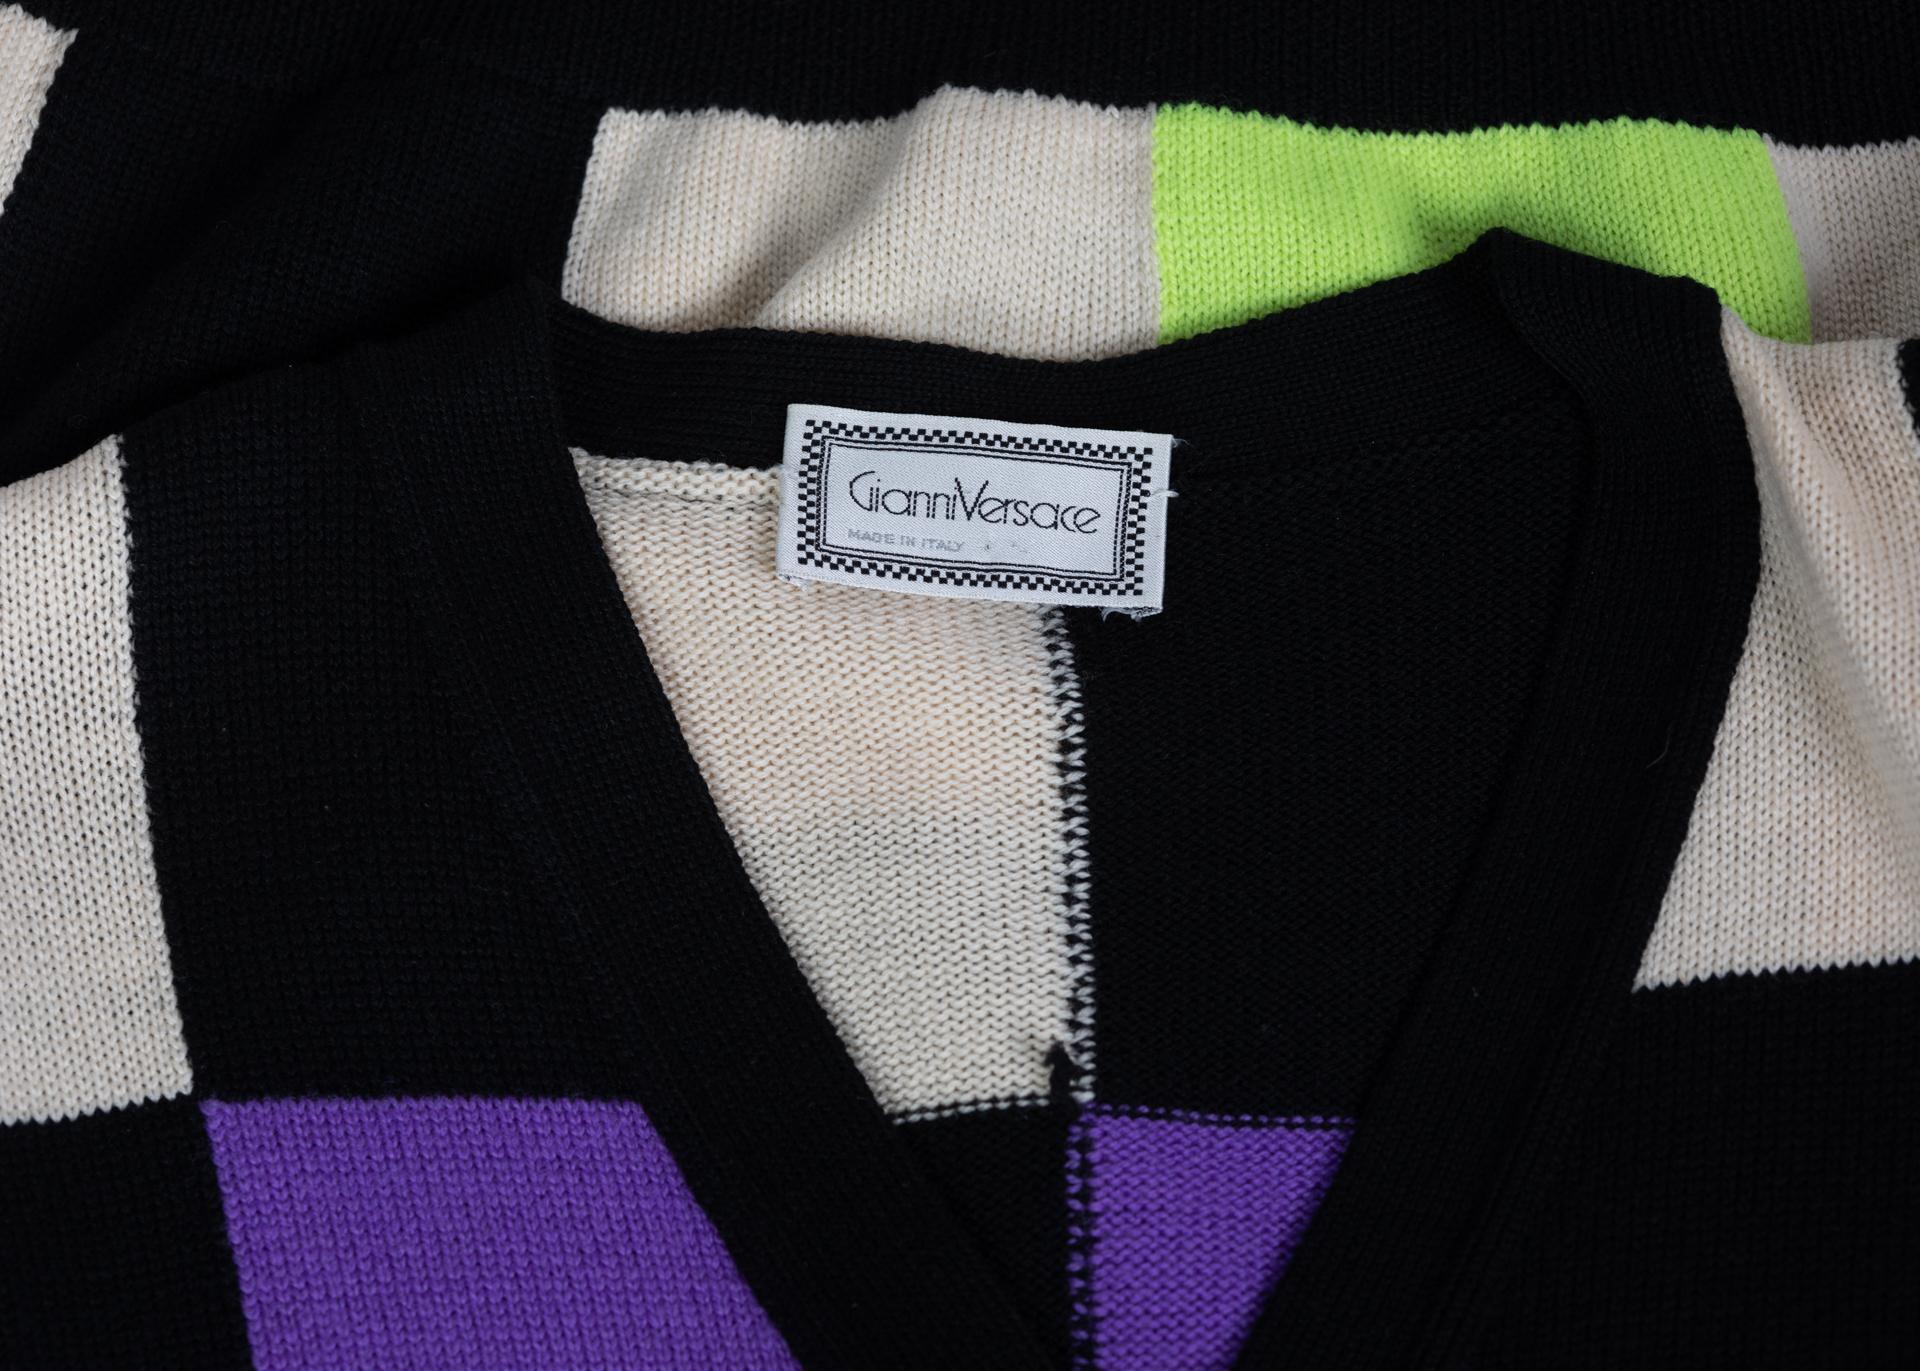 Gianni Versace Colorblock Sweater Vest, 1980s For Sale 1